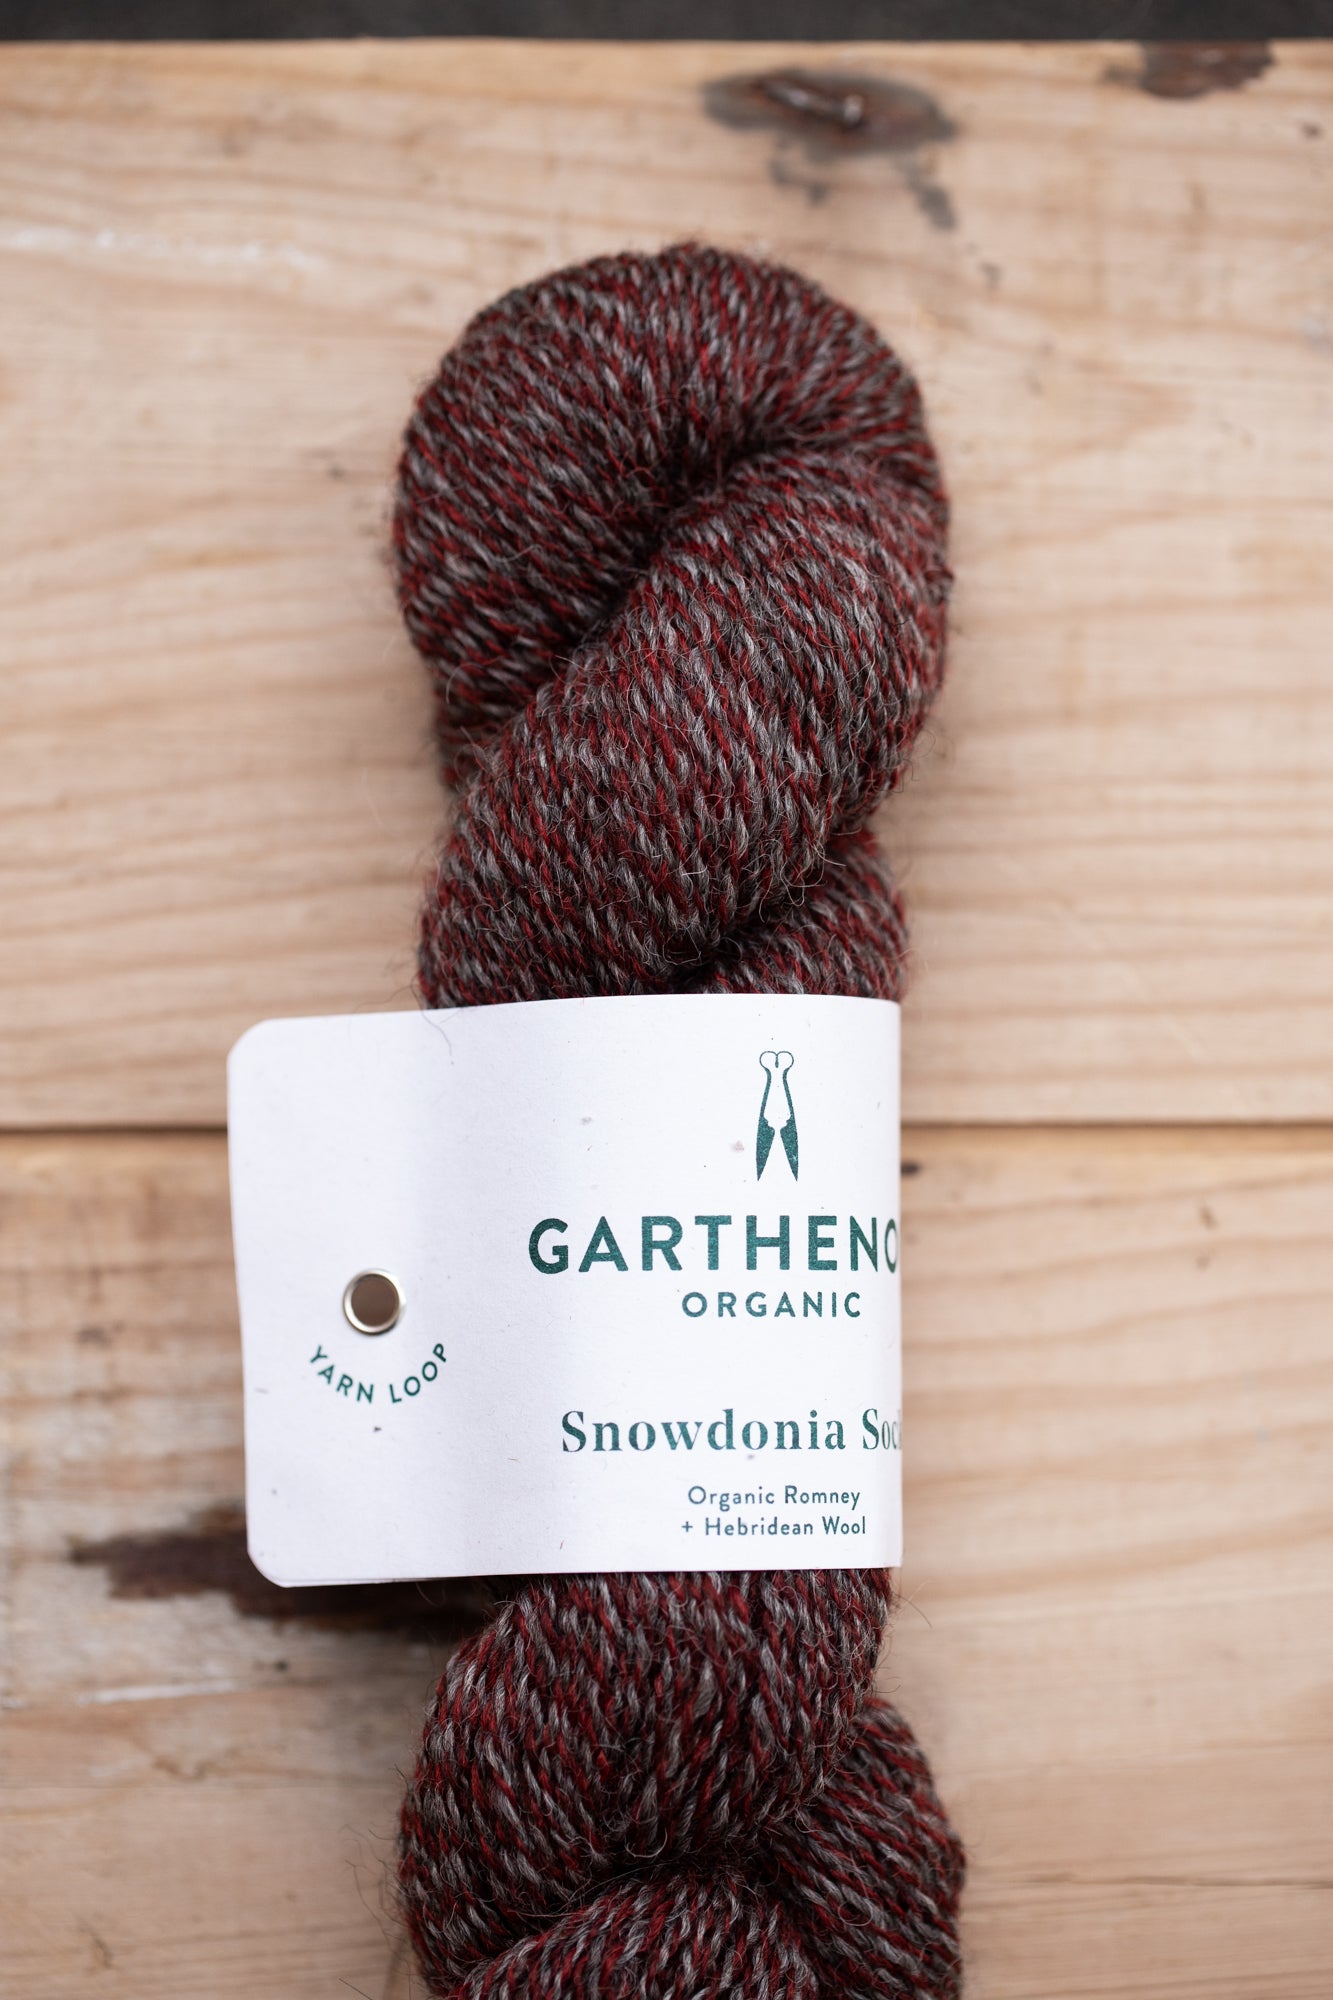 Snowdonia Sock by Garthenor Organic